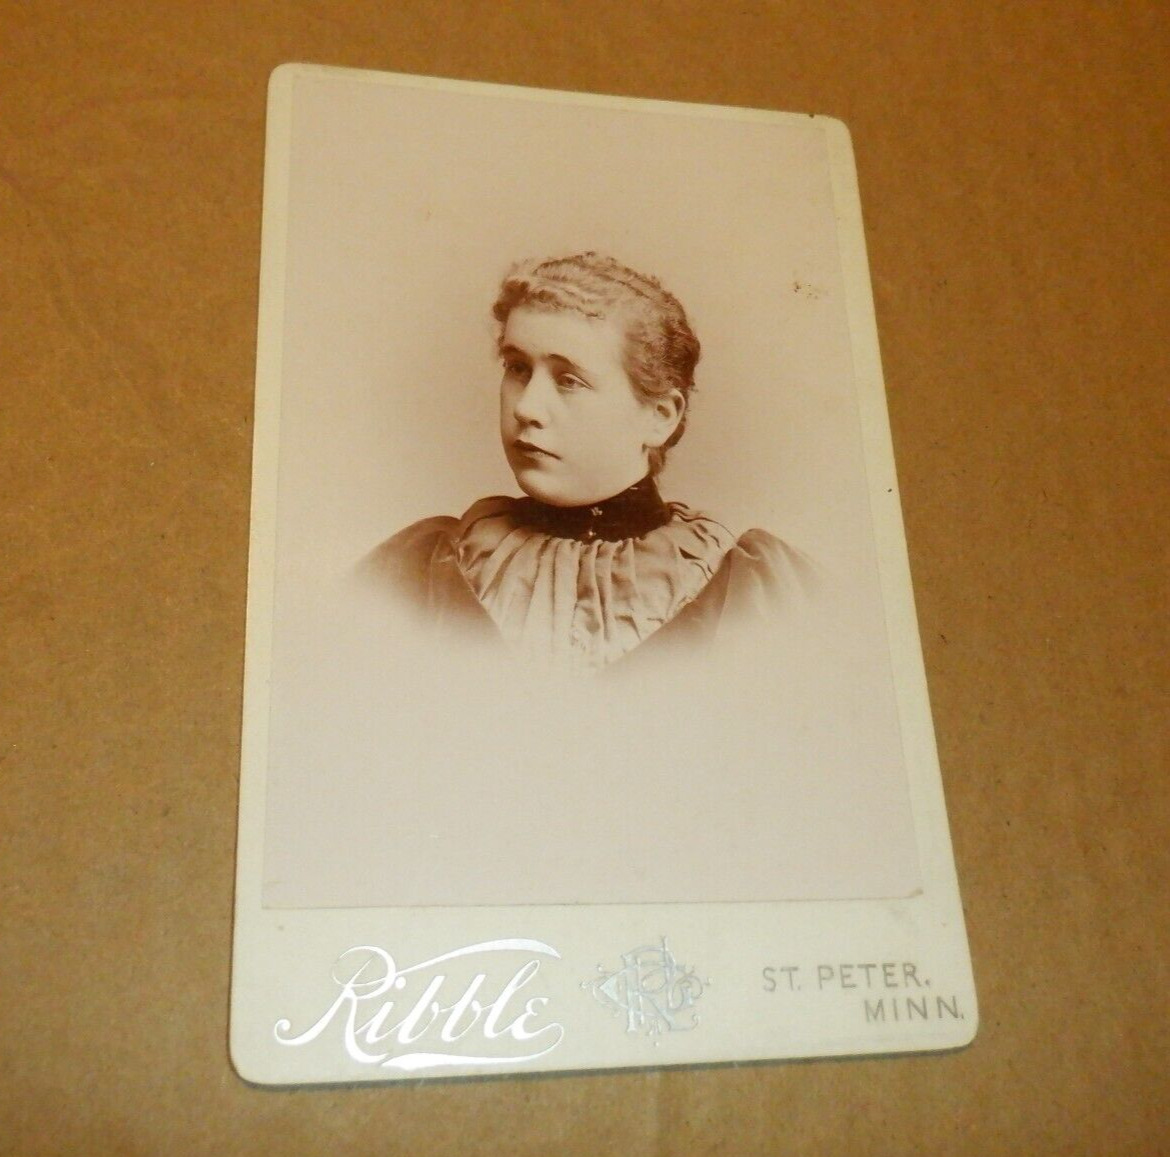 c.1890 ST. PETER MINNESOTA WOMAN CABINET CARD PHOTO PHOTOGRAPH MN MINN RIBBLE